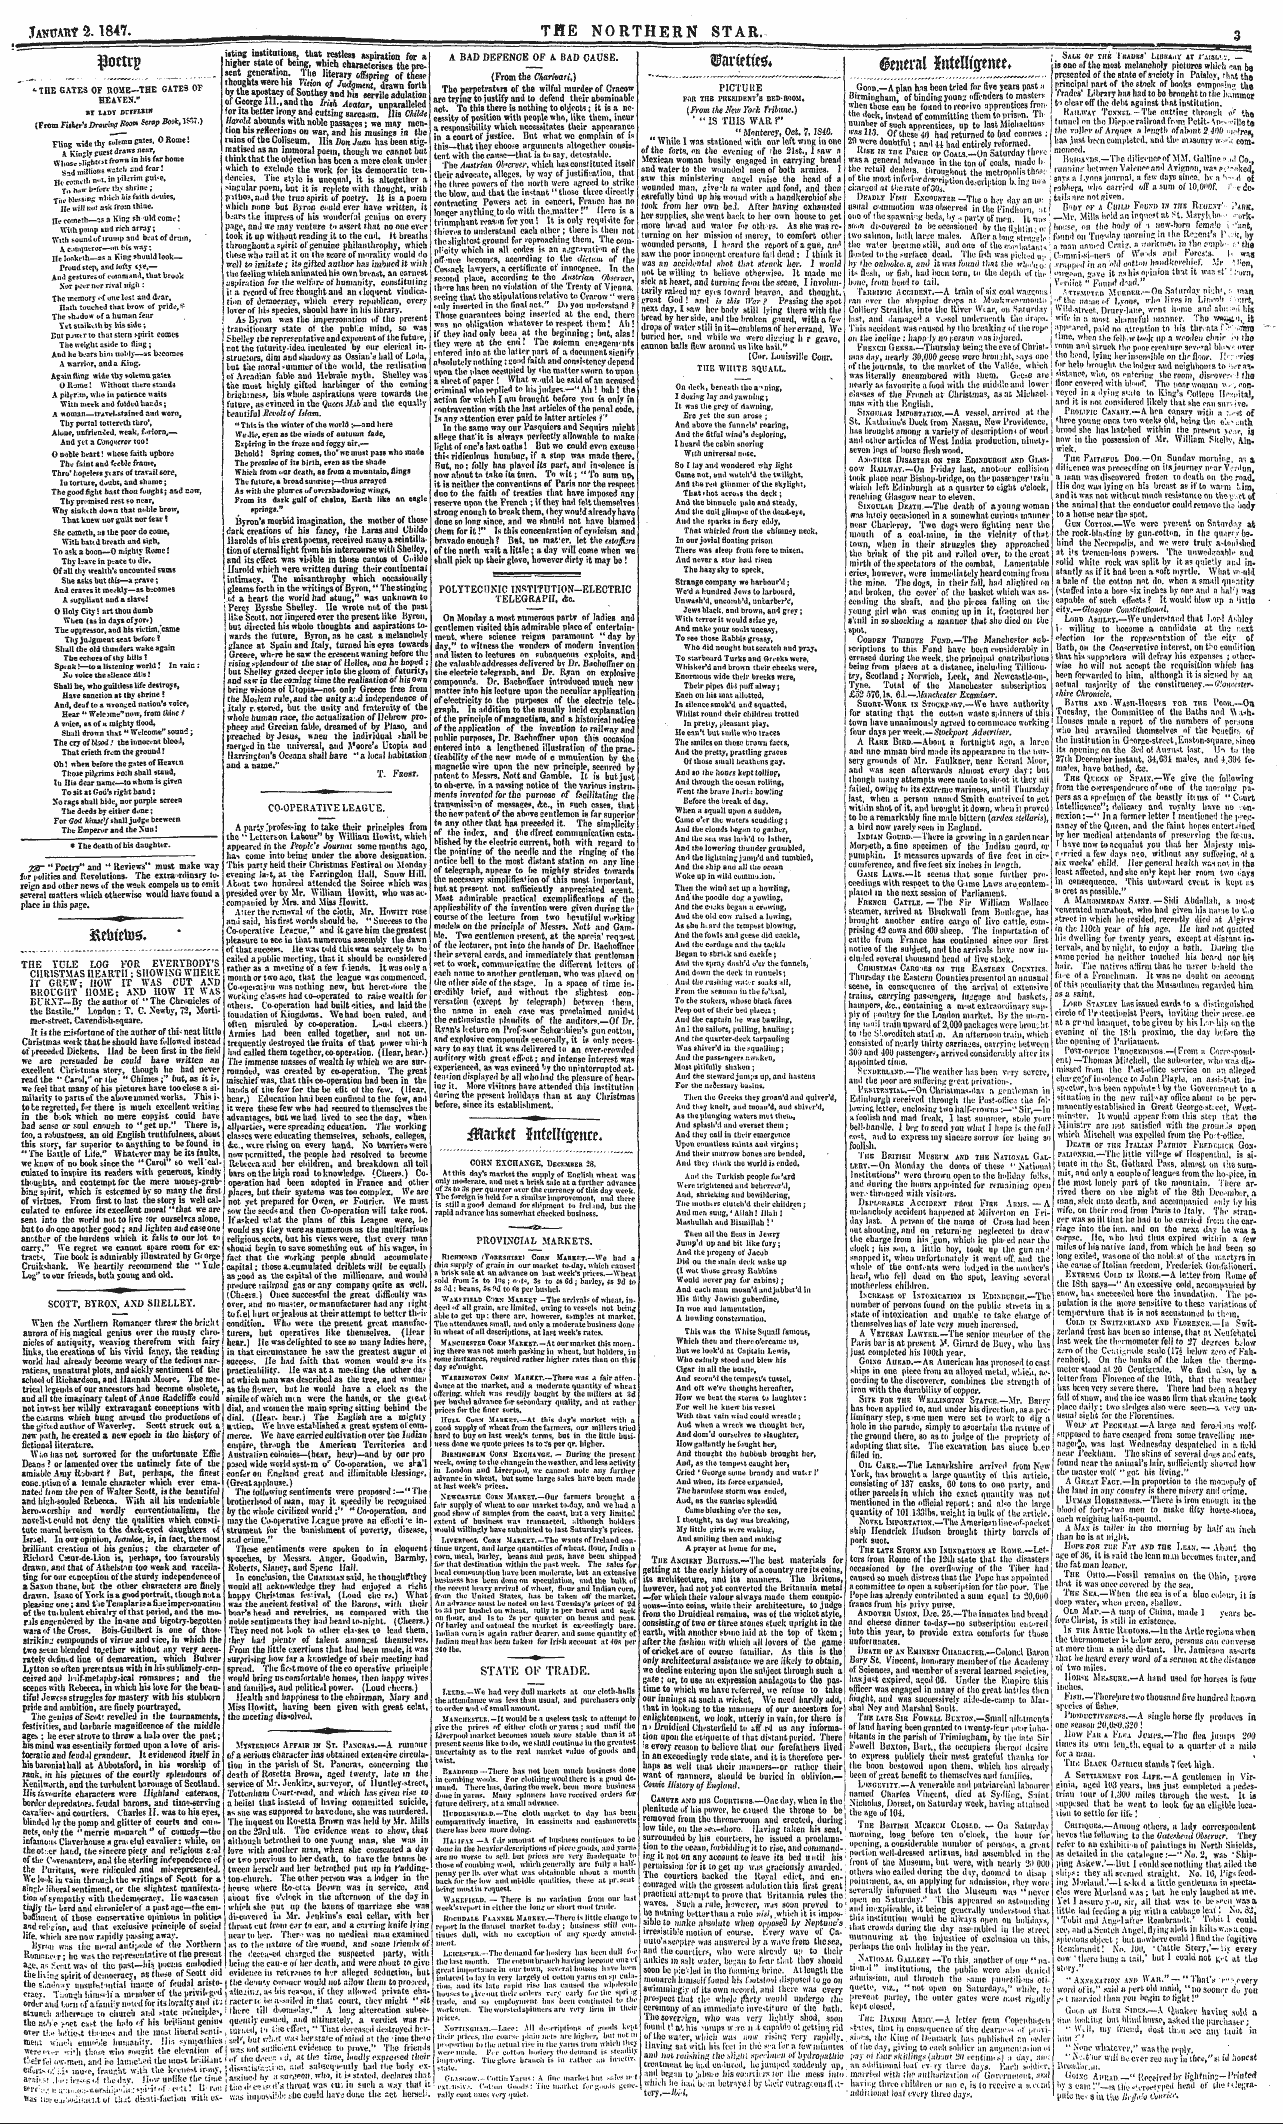 Northern Star (1837-1852): jS F Y, 3rd edition - Mtstekious Affair In St. 1-Anc«As.— A Ru...